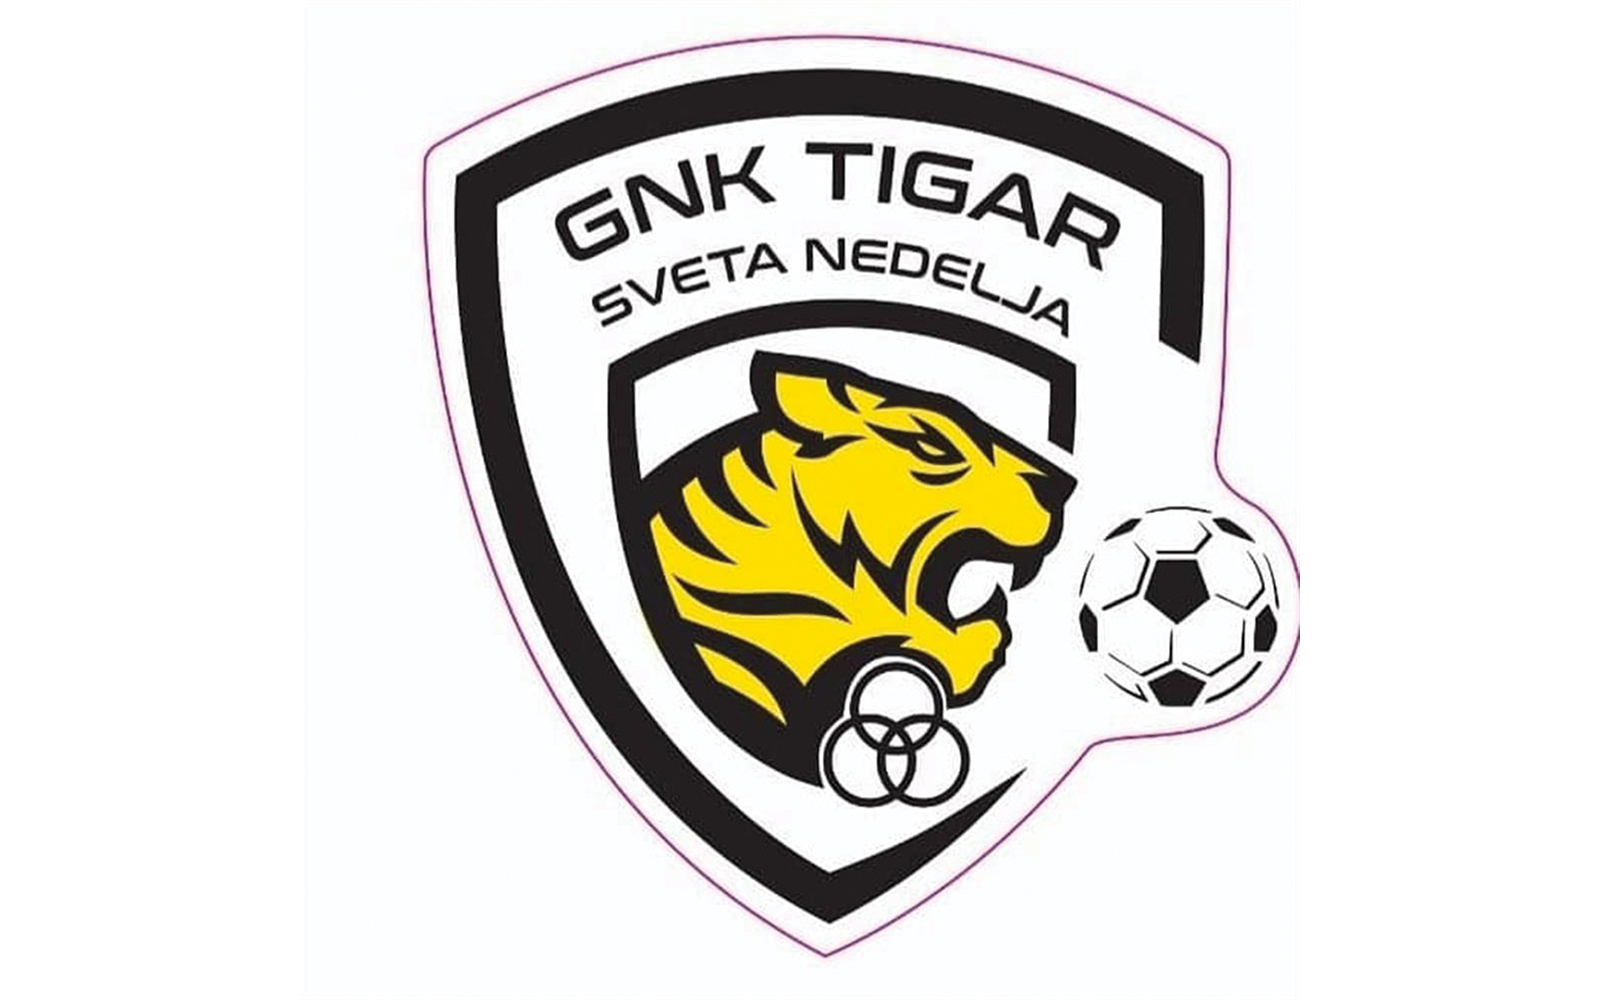 4. nogometna liga sredite Zagreb  B - 1. kolo
Libertas  GNK Tigar Sveta Nedjelja 0:3 (0:1)